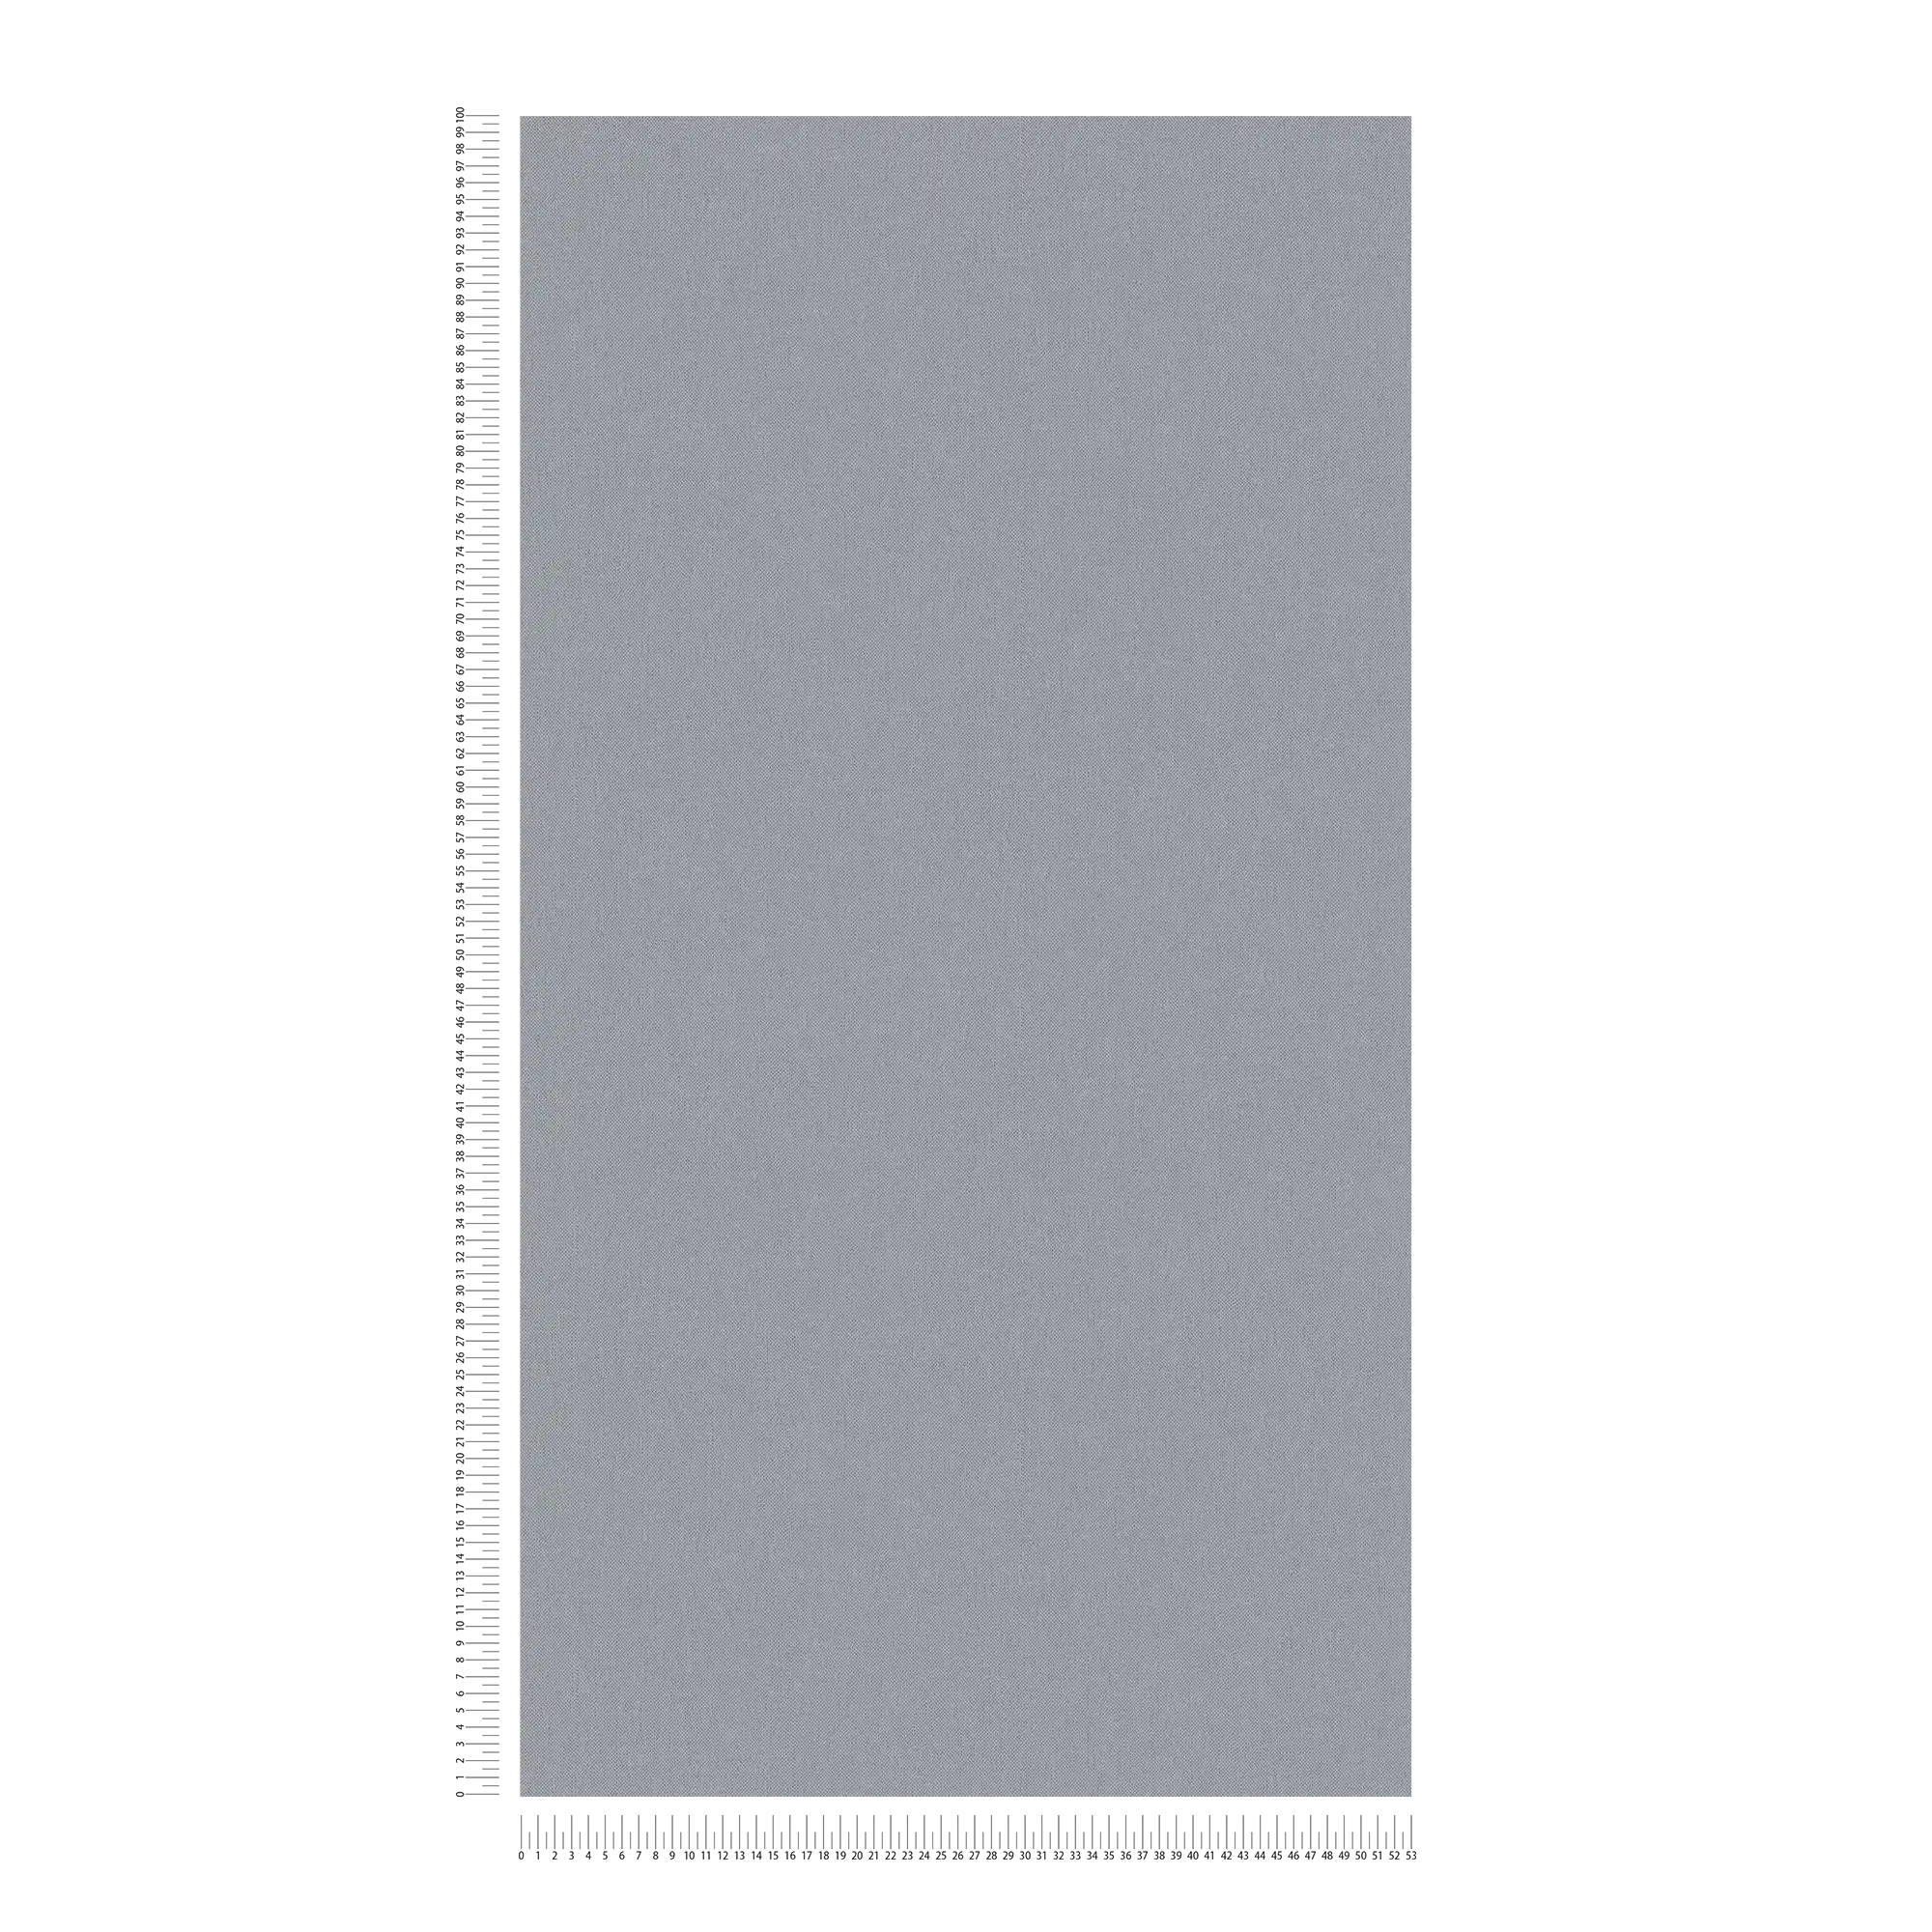             Linen look wallpaper grey with fabric texture & matte surface
        